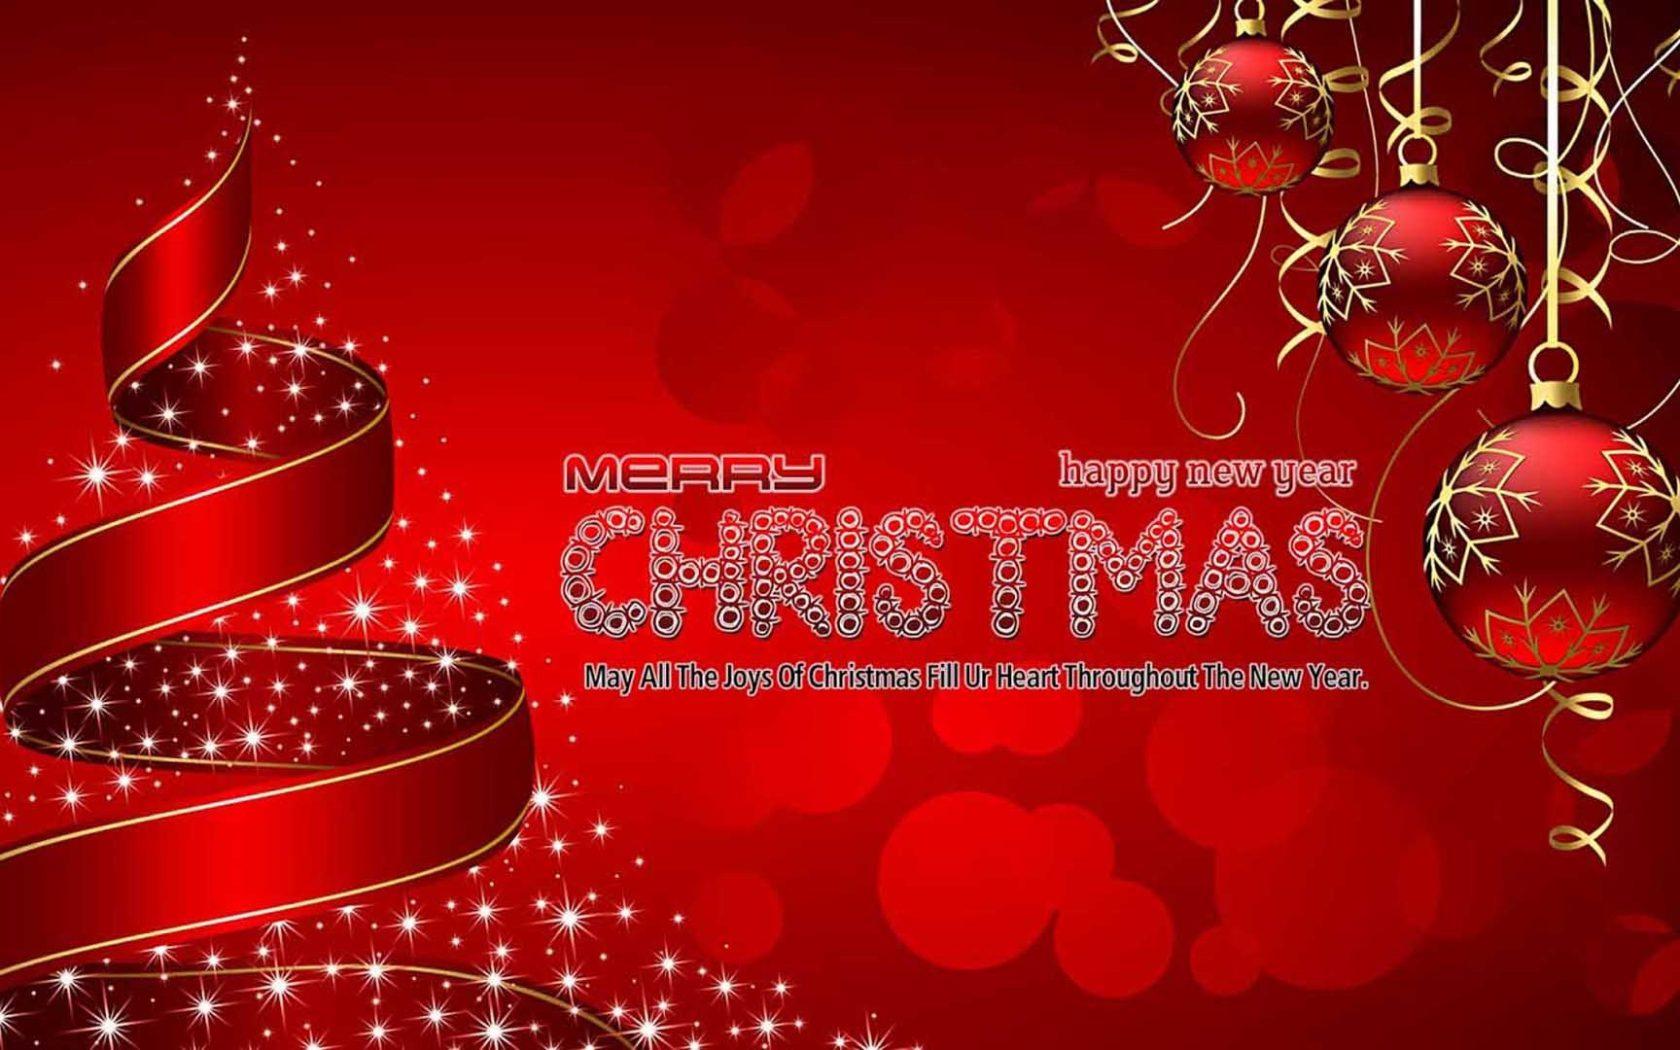 Merry Christmas Happy New Year 2020 Christmas Greetings